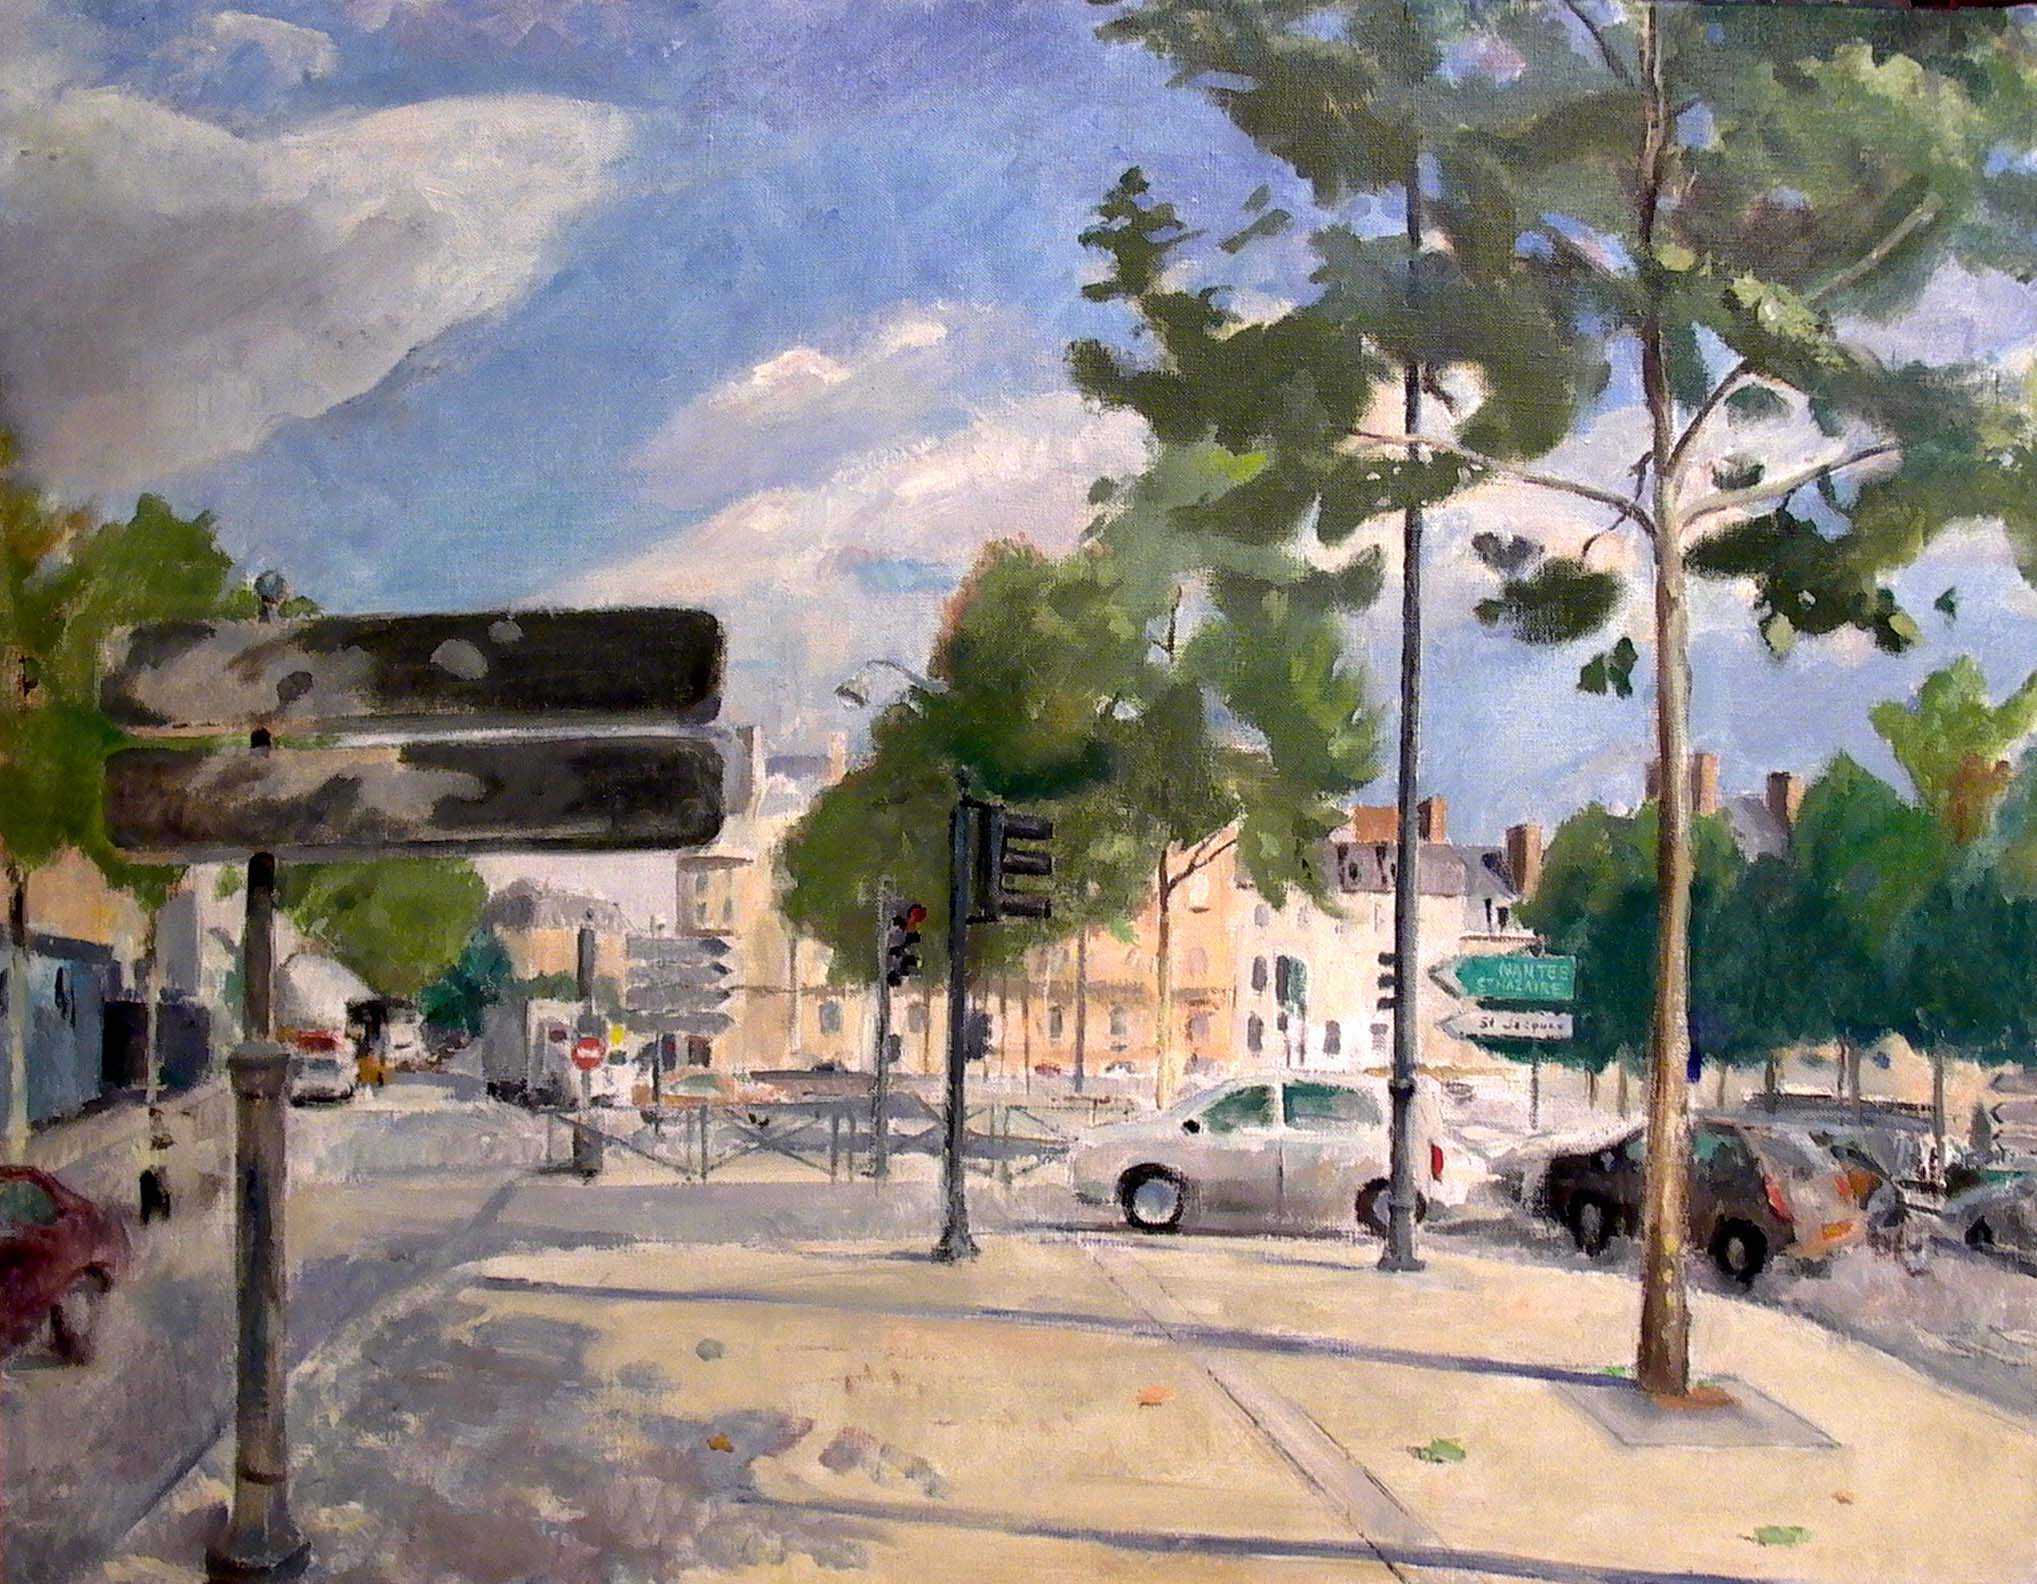 Place de Bretagne Traffic, 32" x 39", oil on linen, 2005.